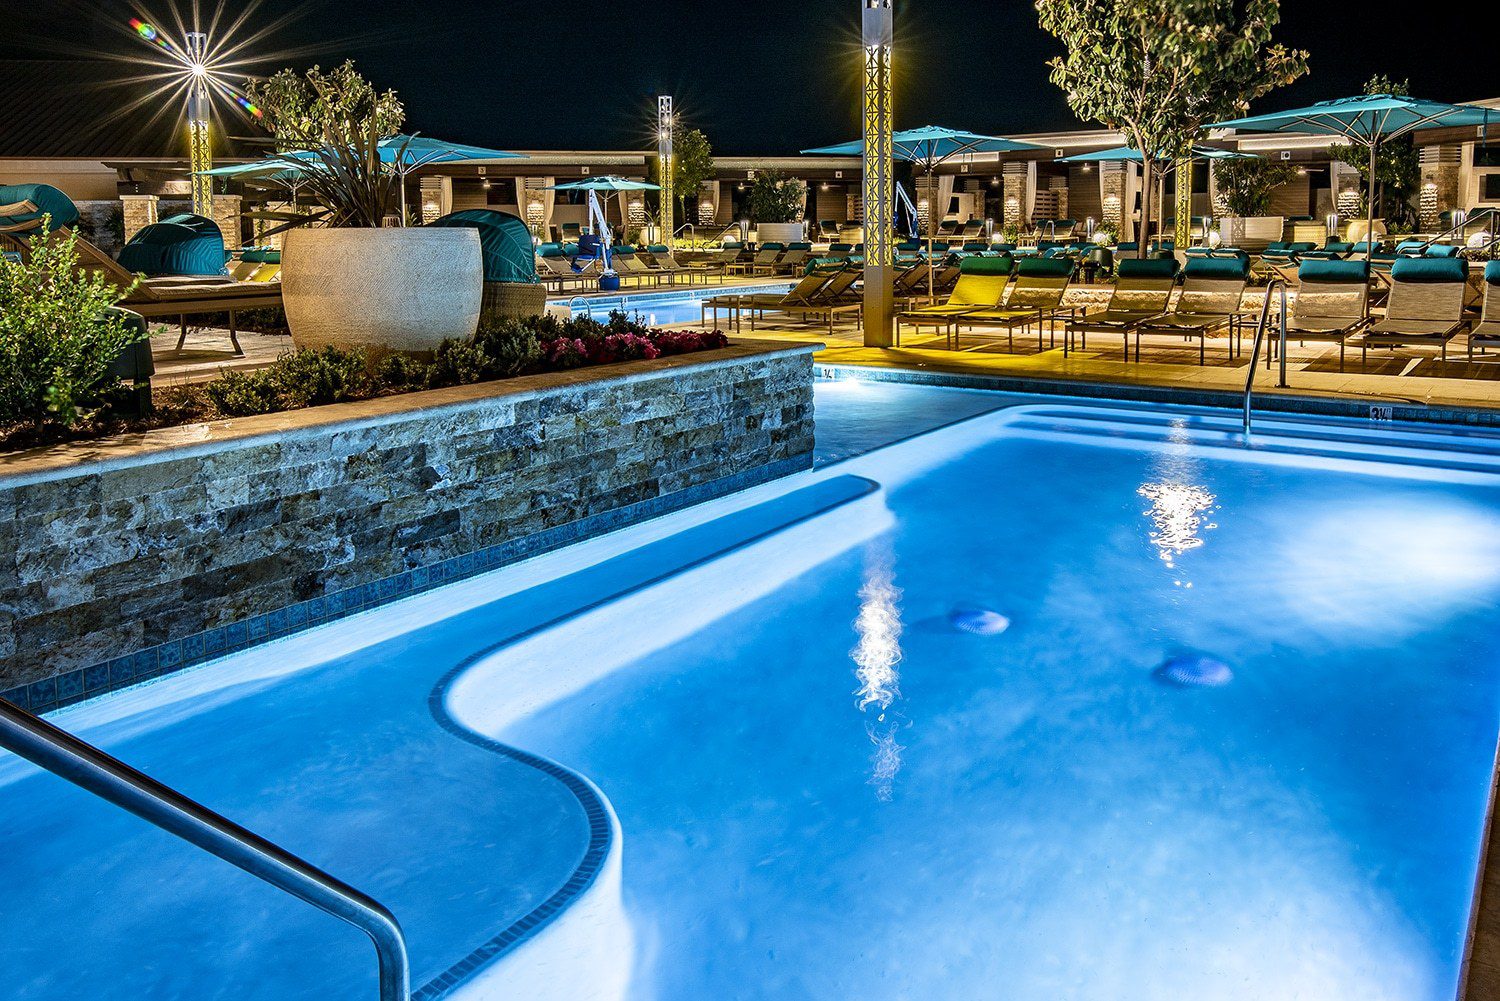 The Pala Casino Spa & Resort’s New Pool Complex 8